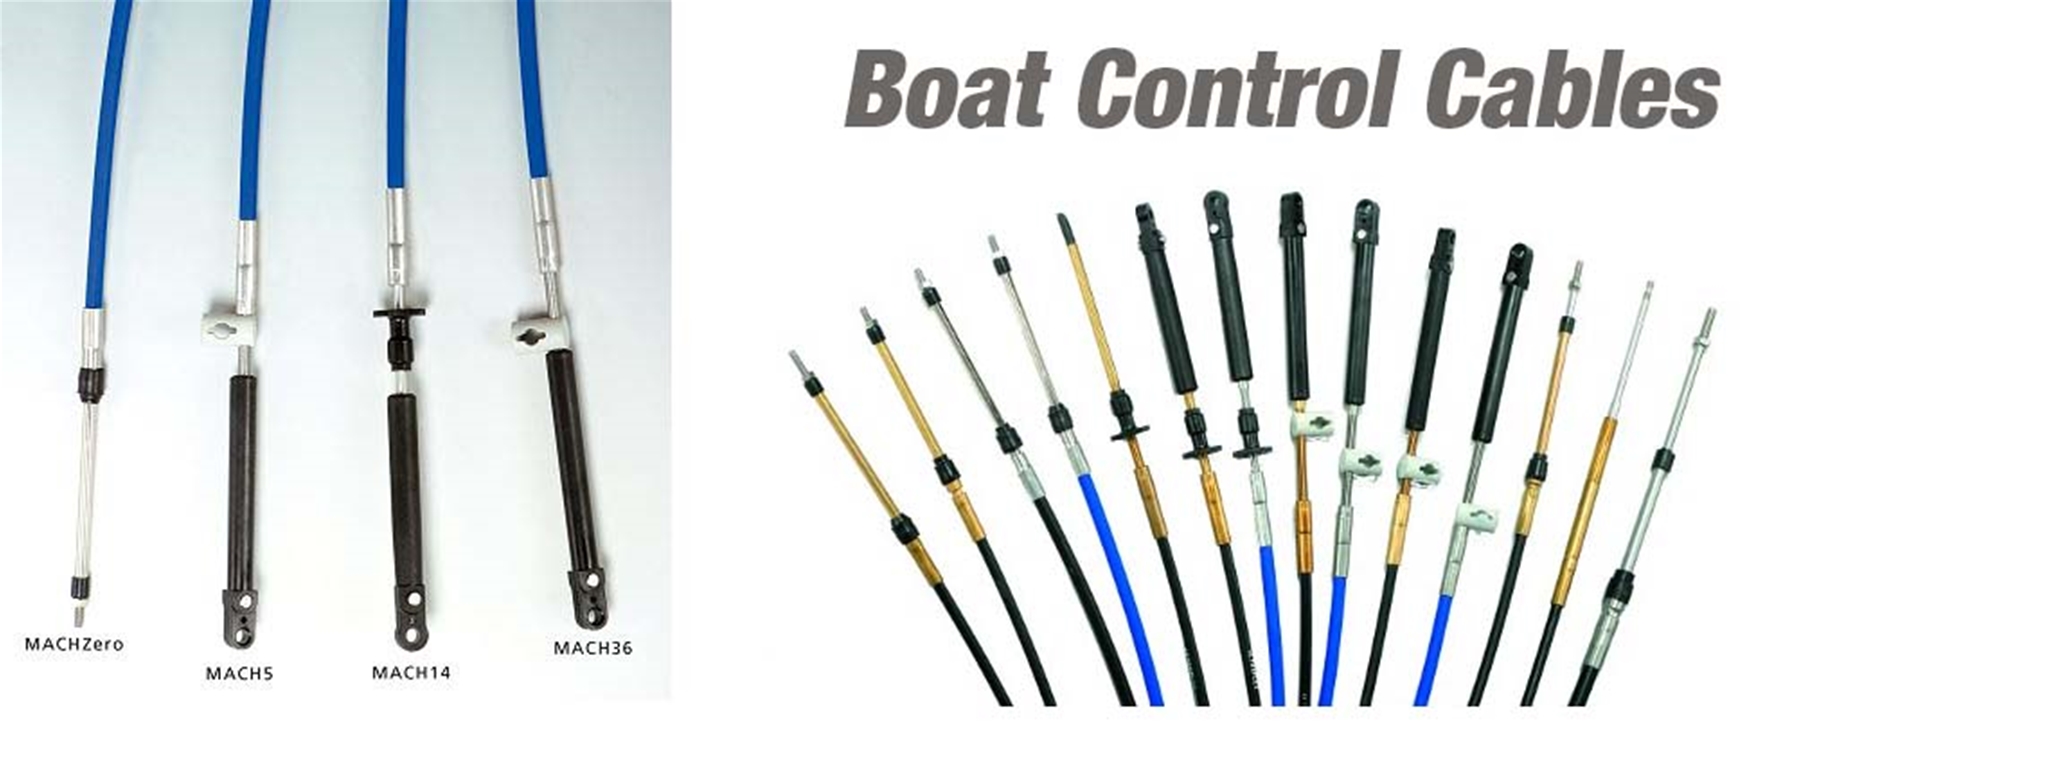 Boat Control Cables